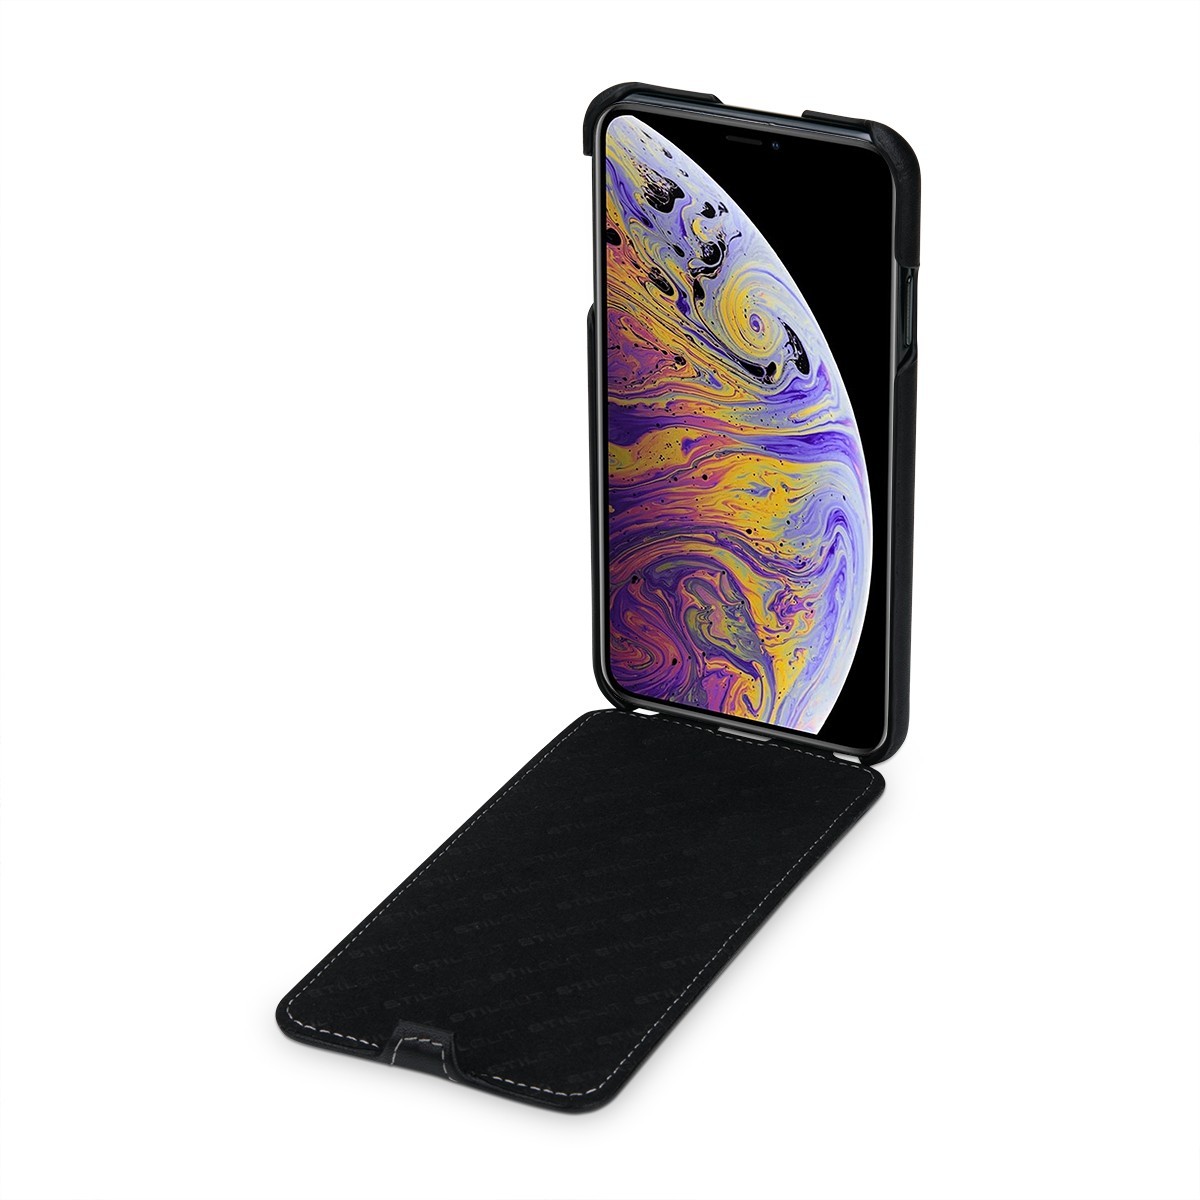 Etui iPhone Xs Max  ultraslim noir nappa en cuir véritable - Stilgut